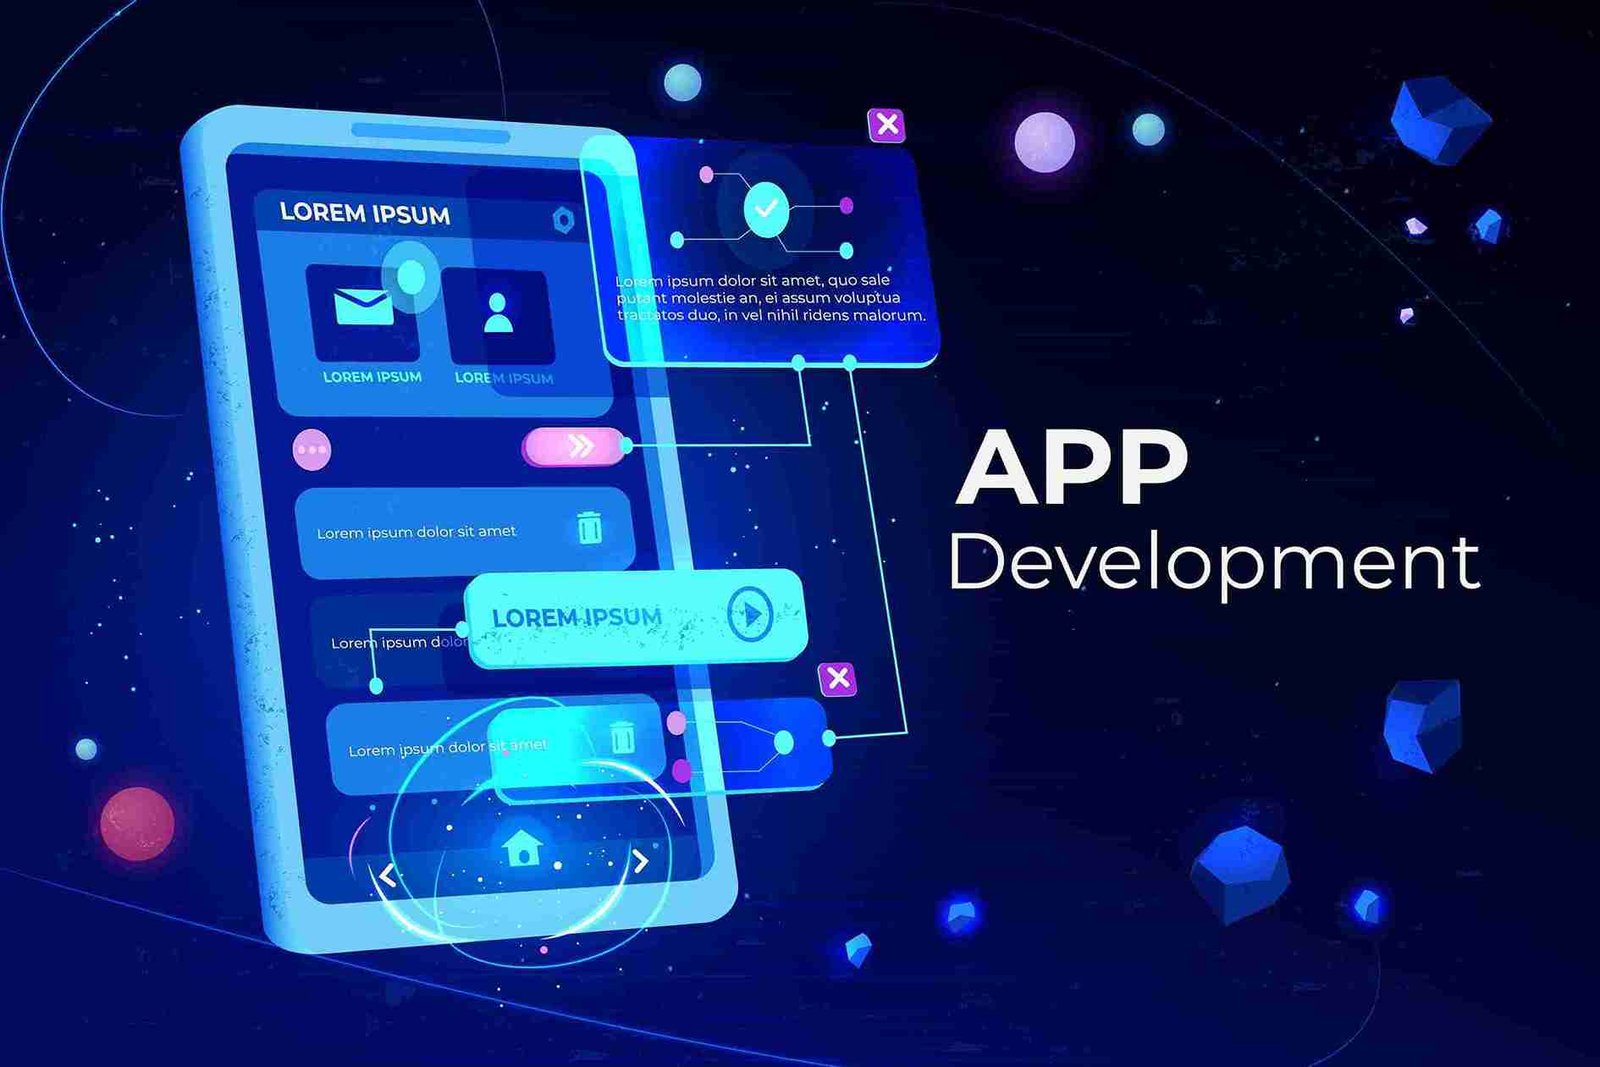 Mobile App Development Companies